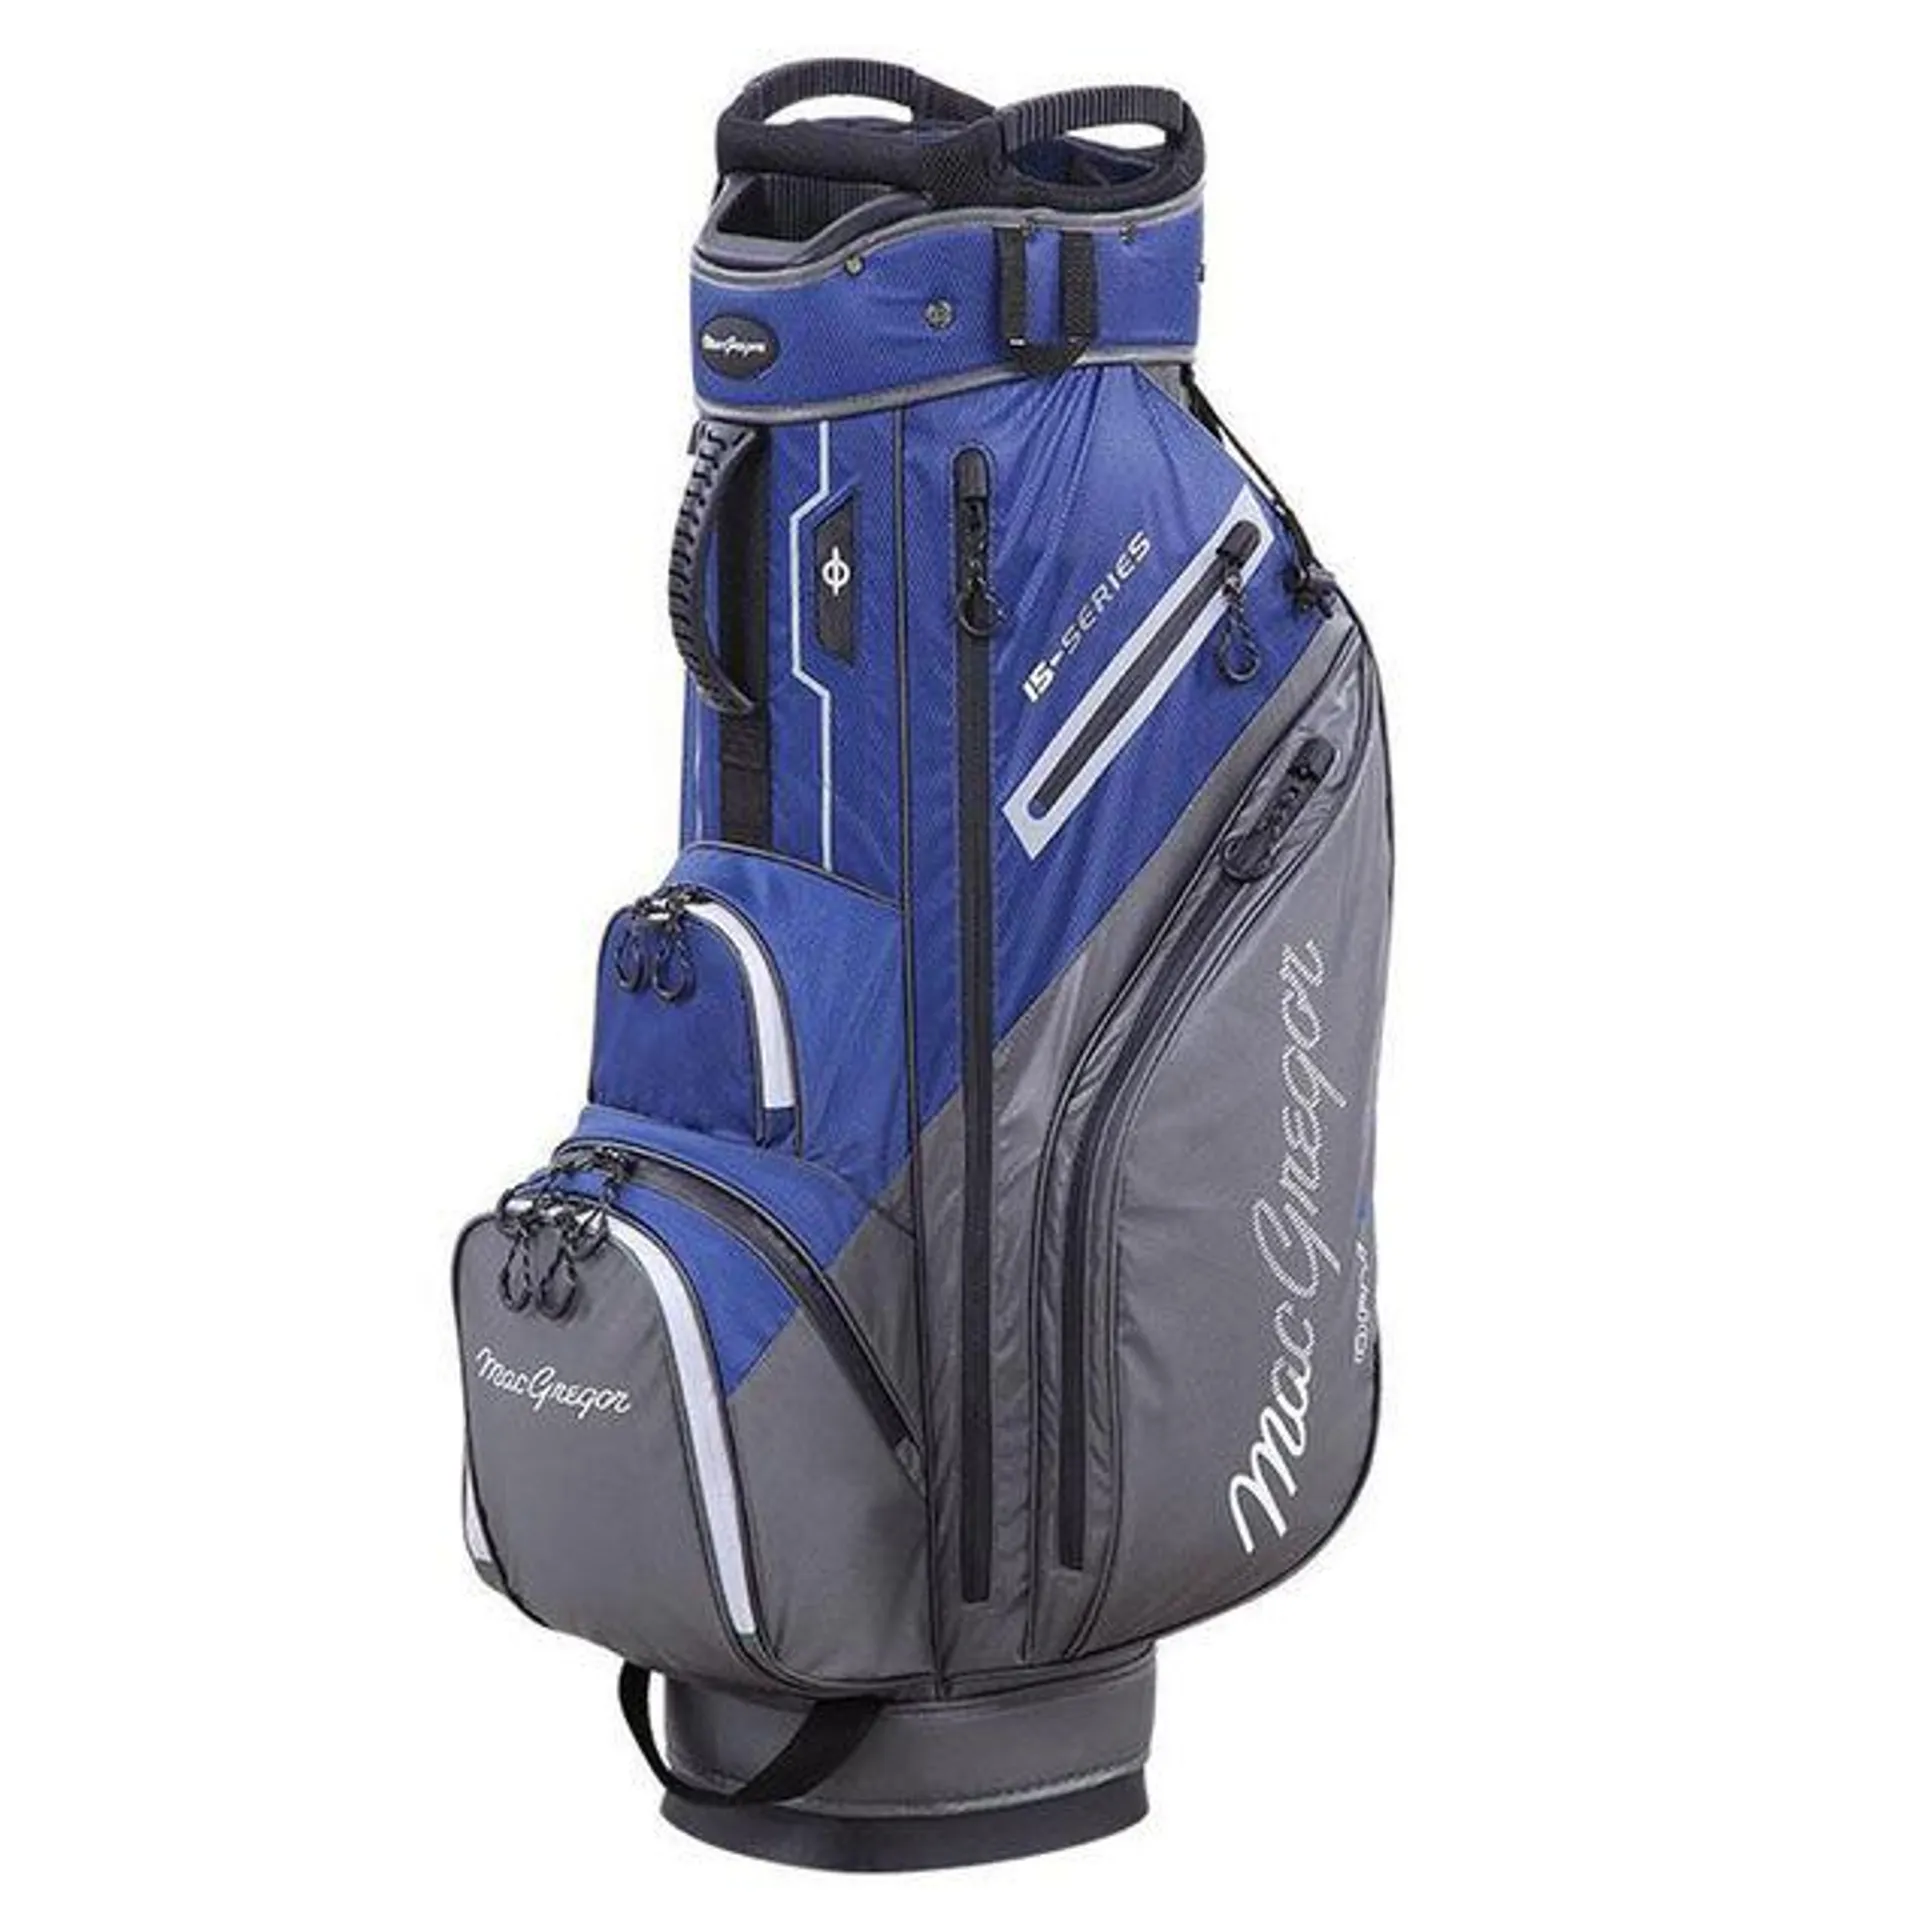 MacGregor 15-Series Water-Resistant Golf Cart Bag